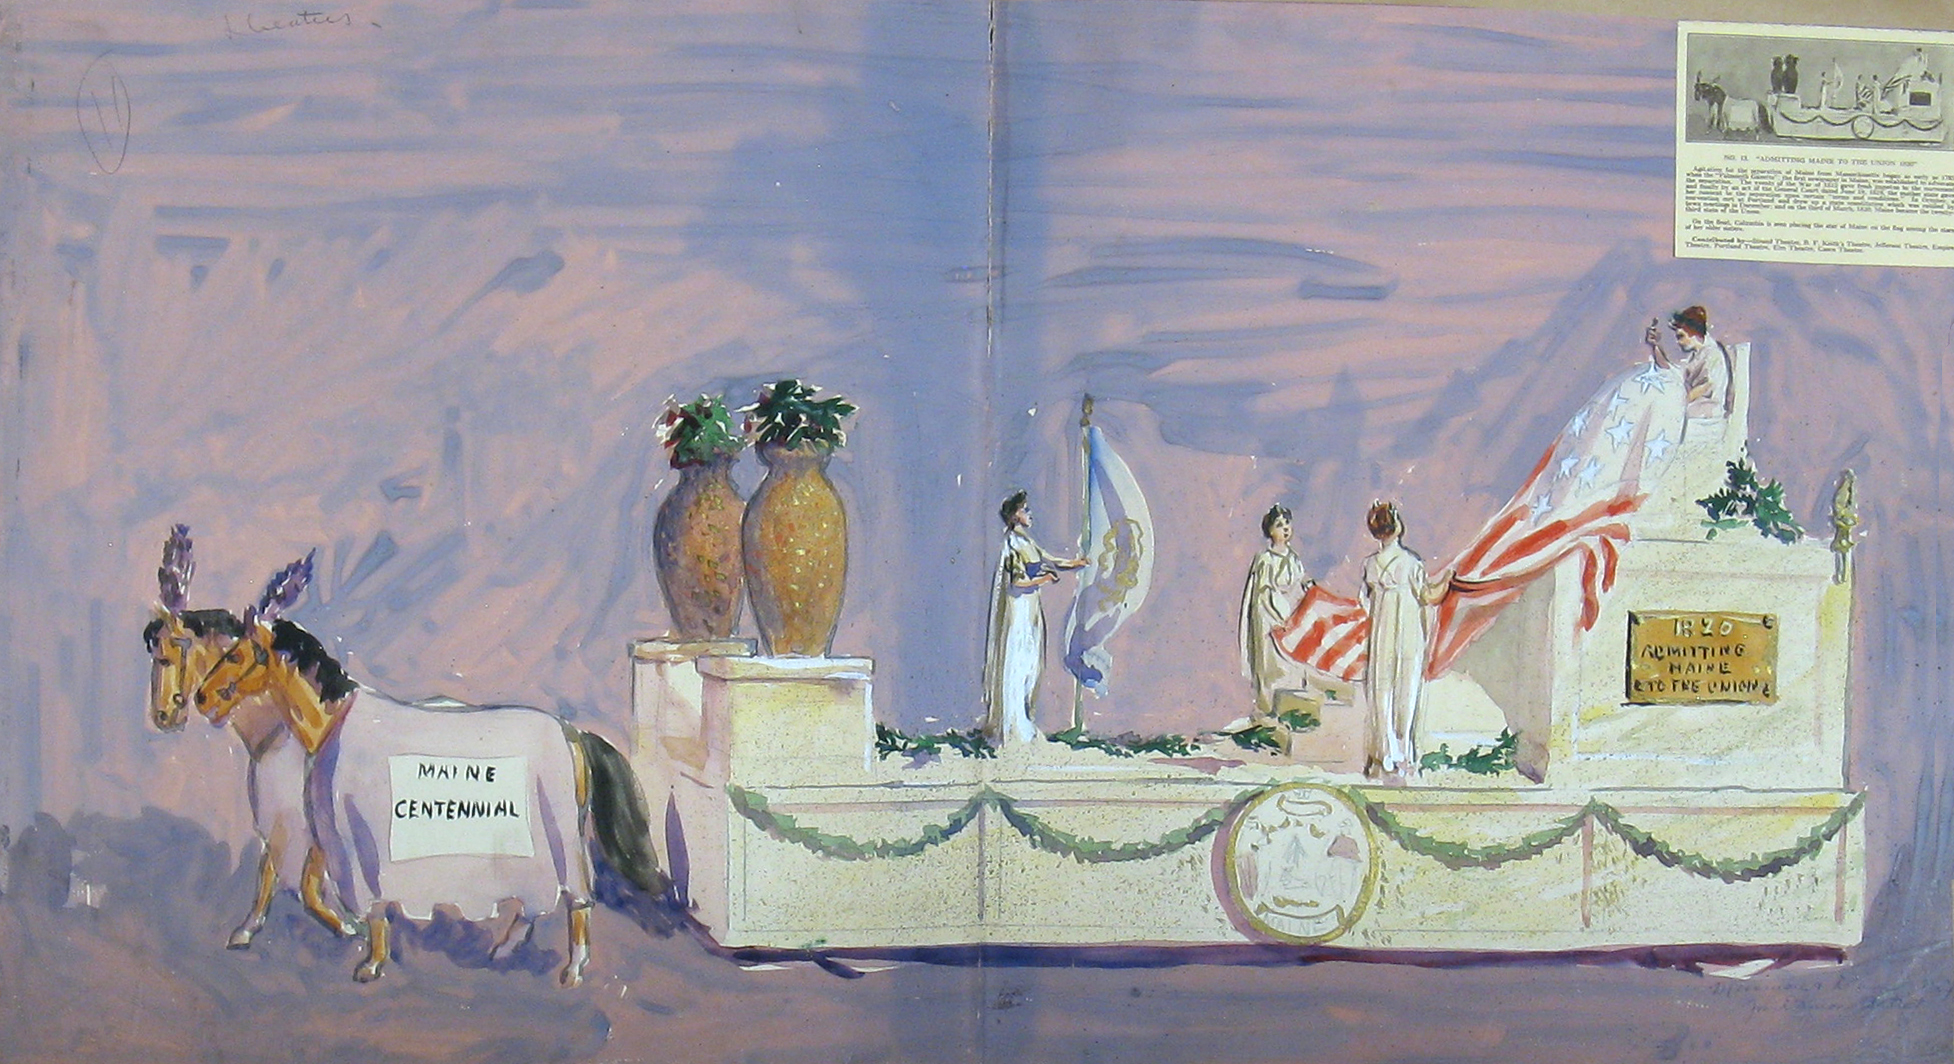 Maine Centennial Parade Floats 1920